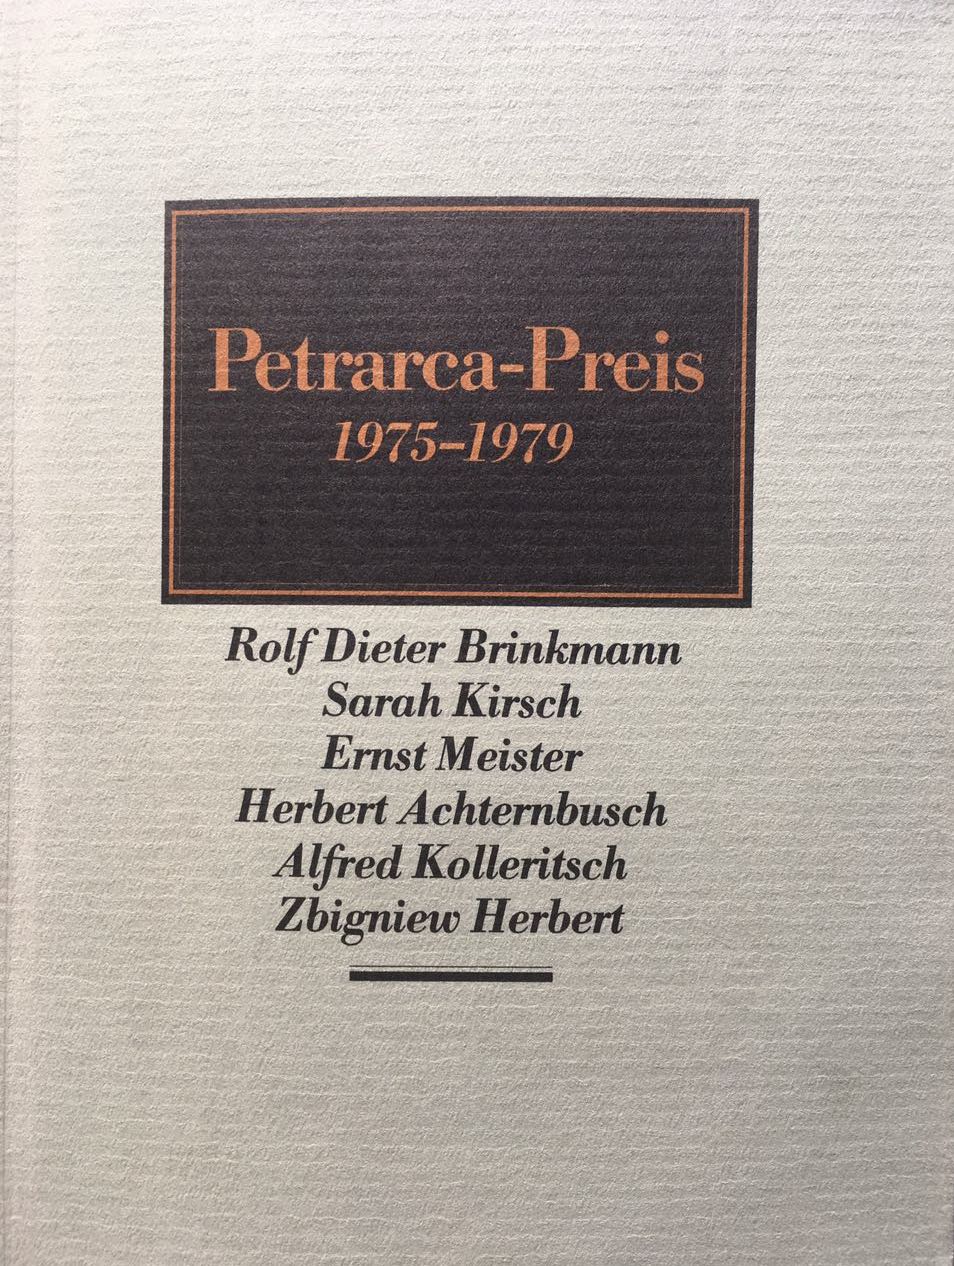 Petrarca-Preis 1975-1979, Bild: München: Autorenbuchhandlung, 1980..